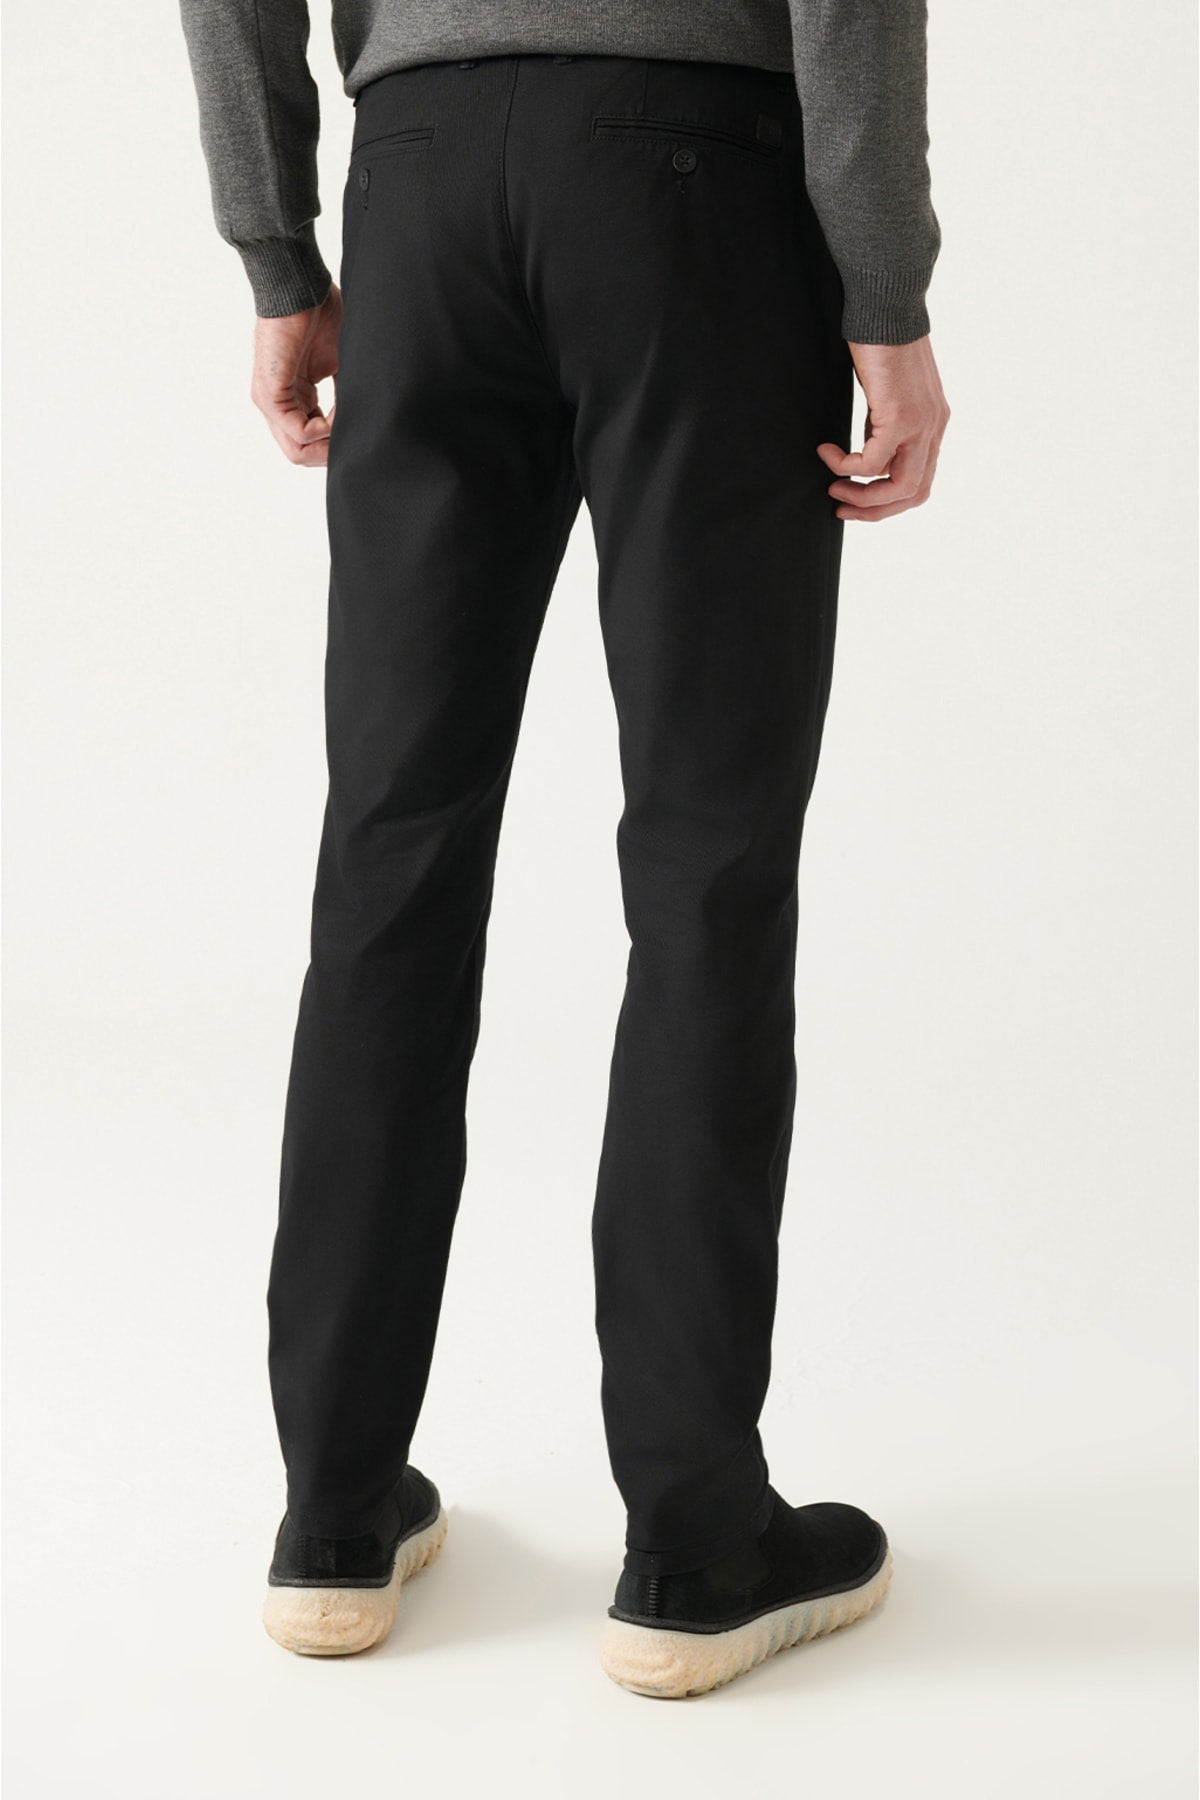 Black Astruly Basic Slim Fit Chino Canvas Pants B003002